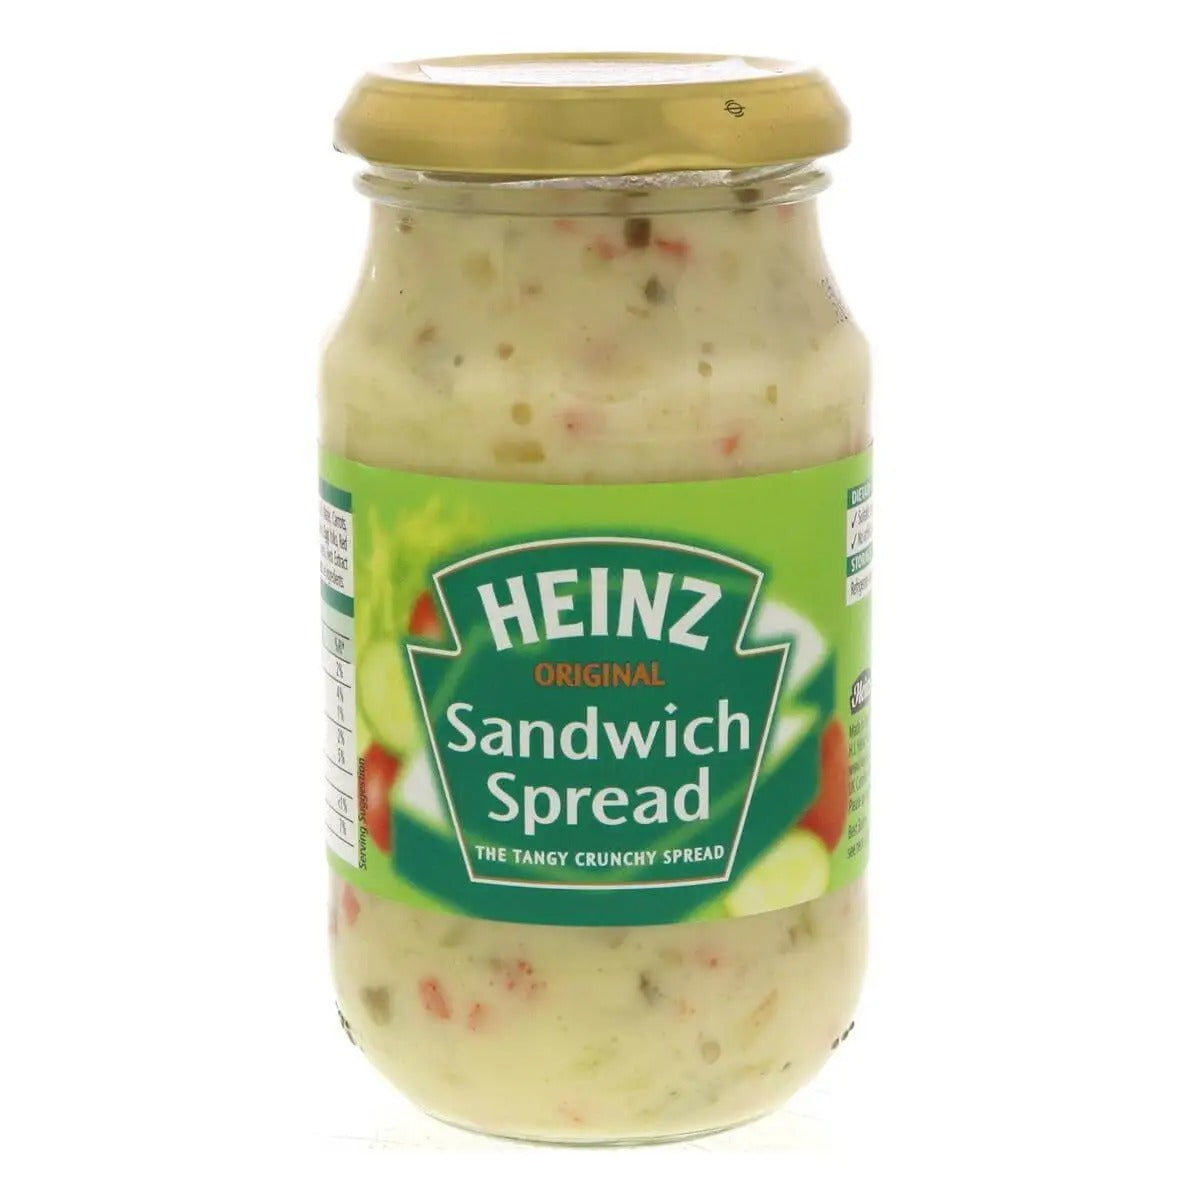 A jar of Heinz - Original Sandwich Spread - 300g on a white background.